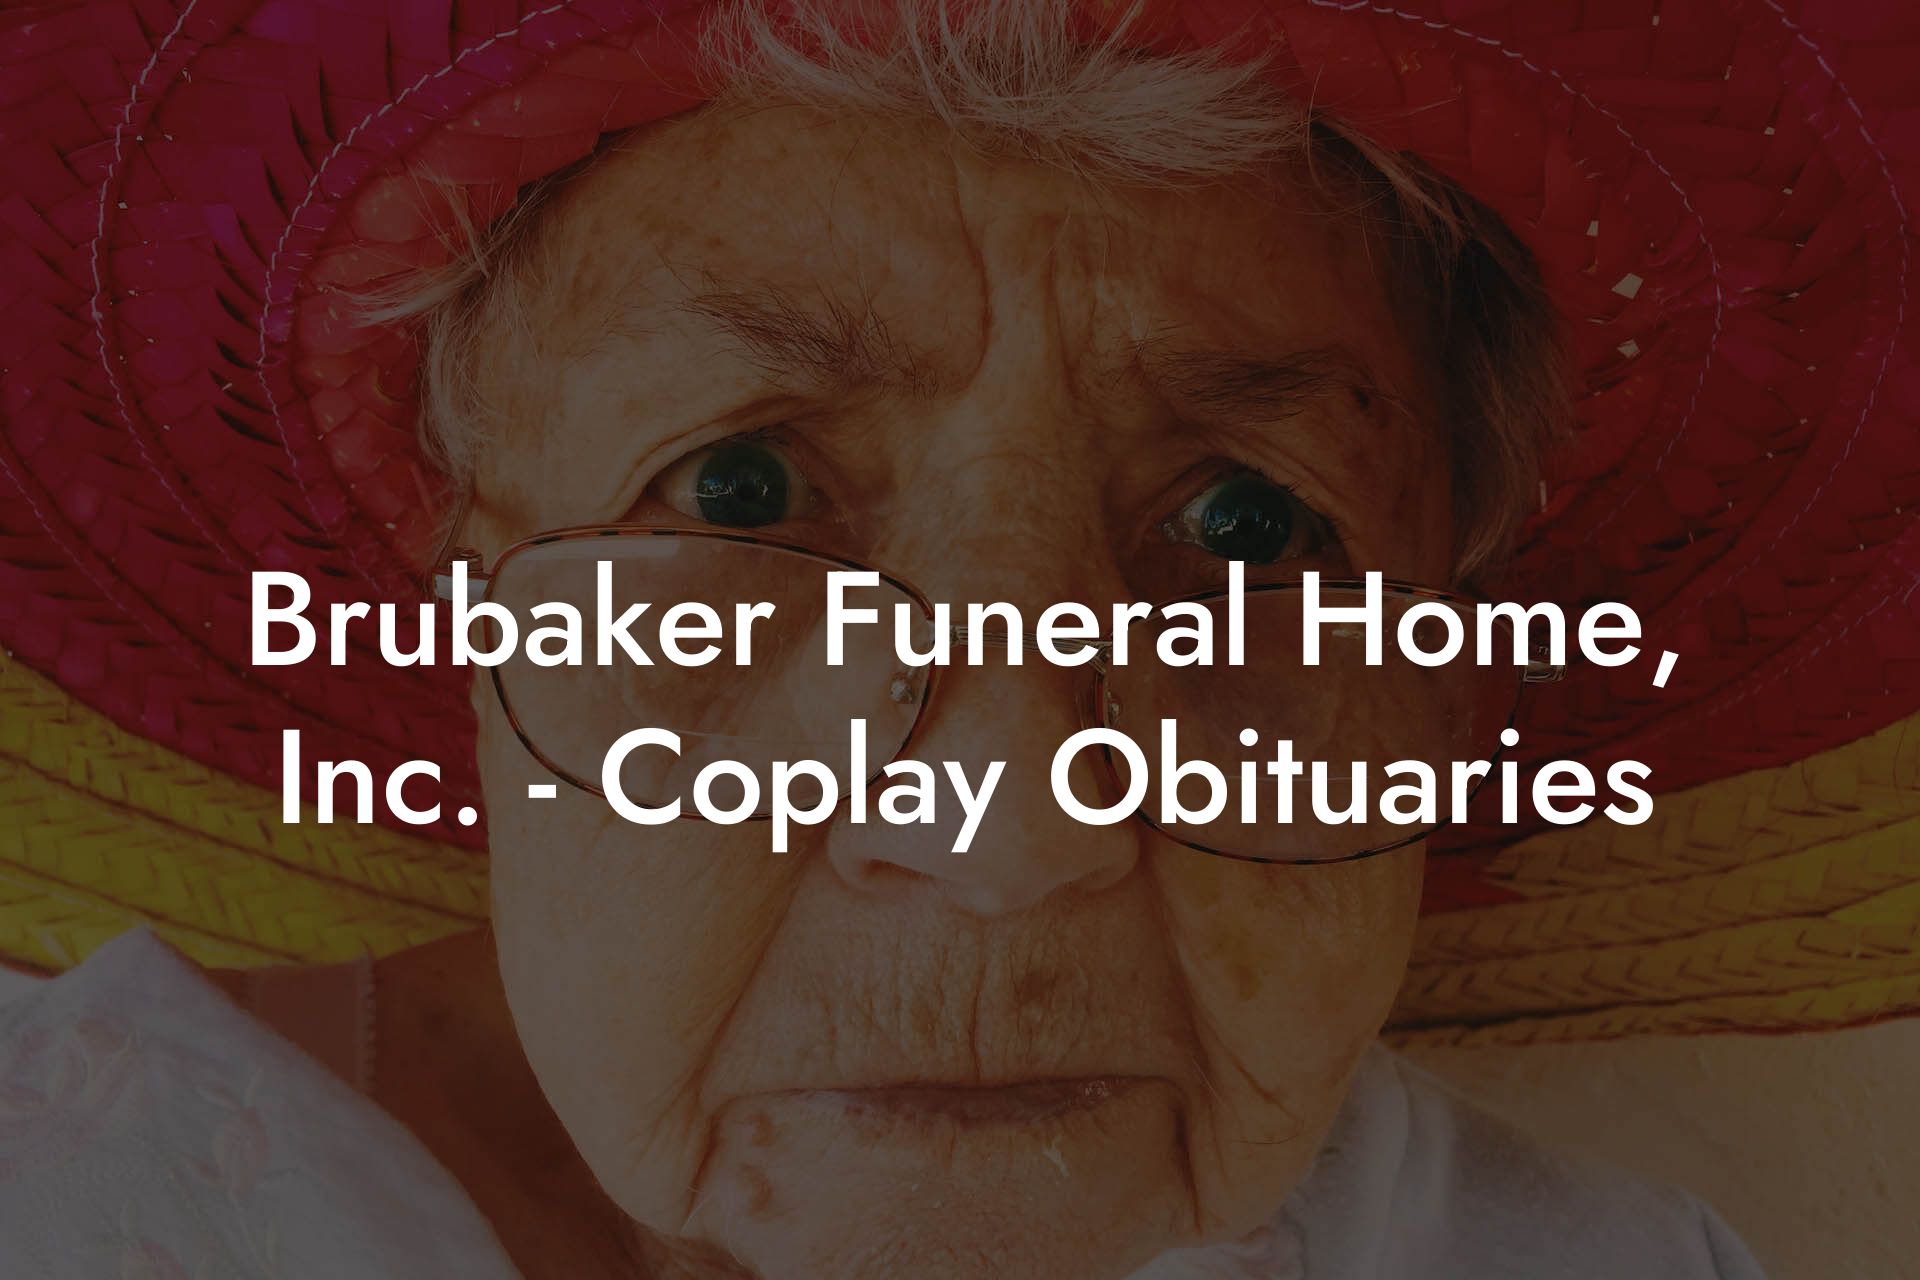 Brubaker Funeral Home, Inc. - Coplay Obituaries